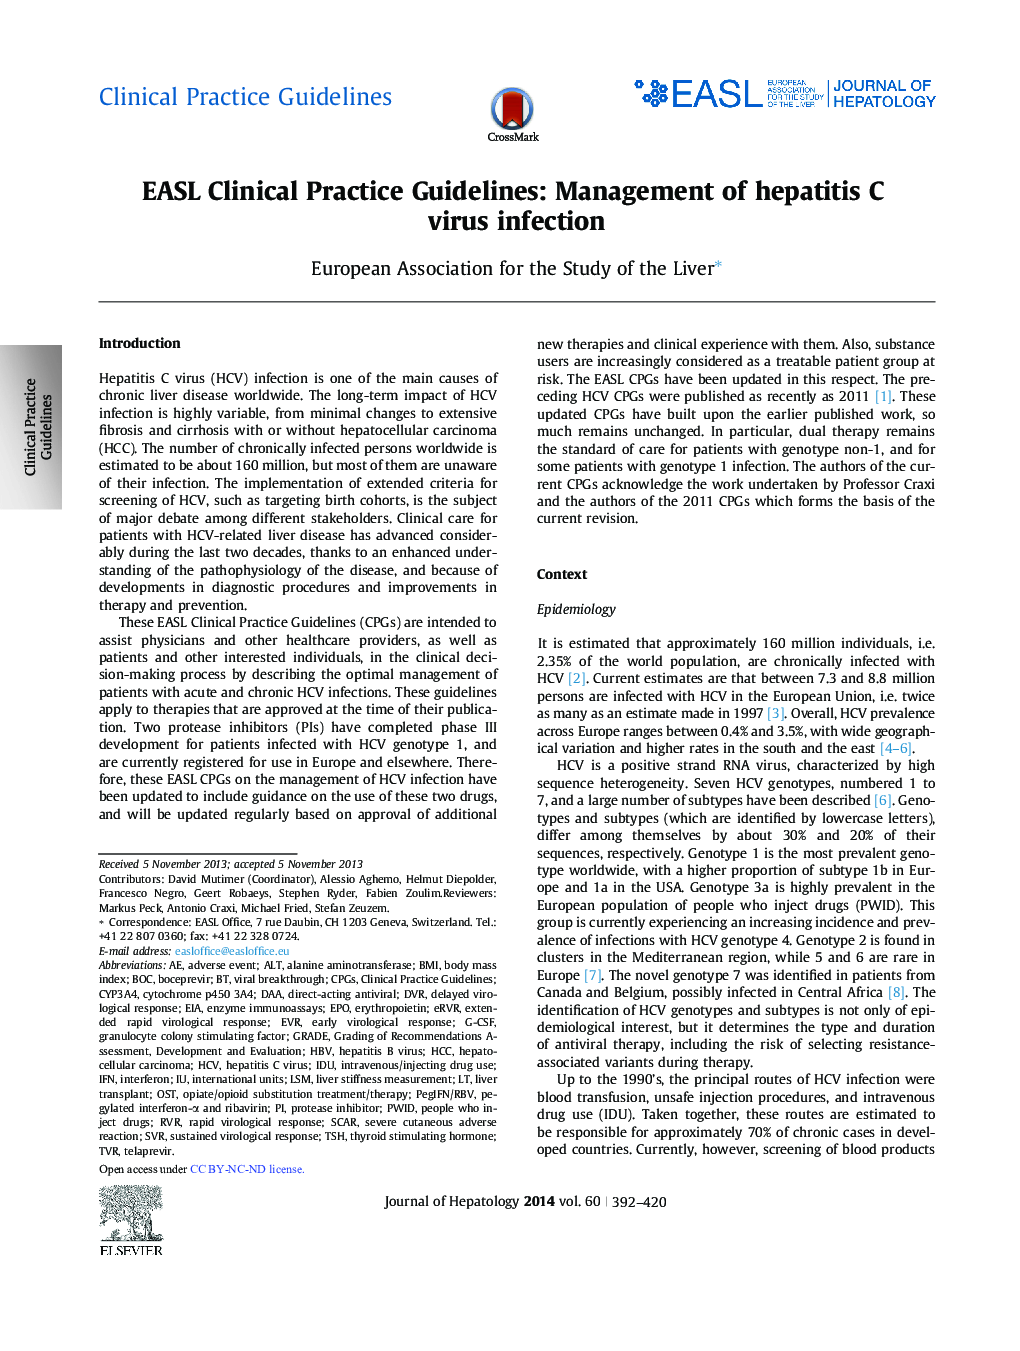 EASL Clinical Practice Guidelines: Management of hepatitis C virus infection